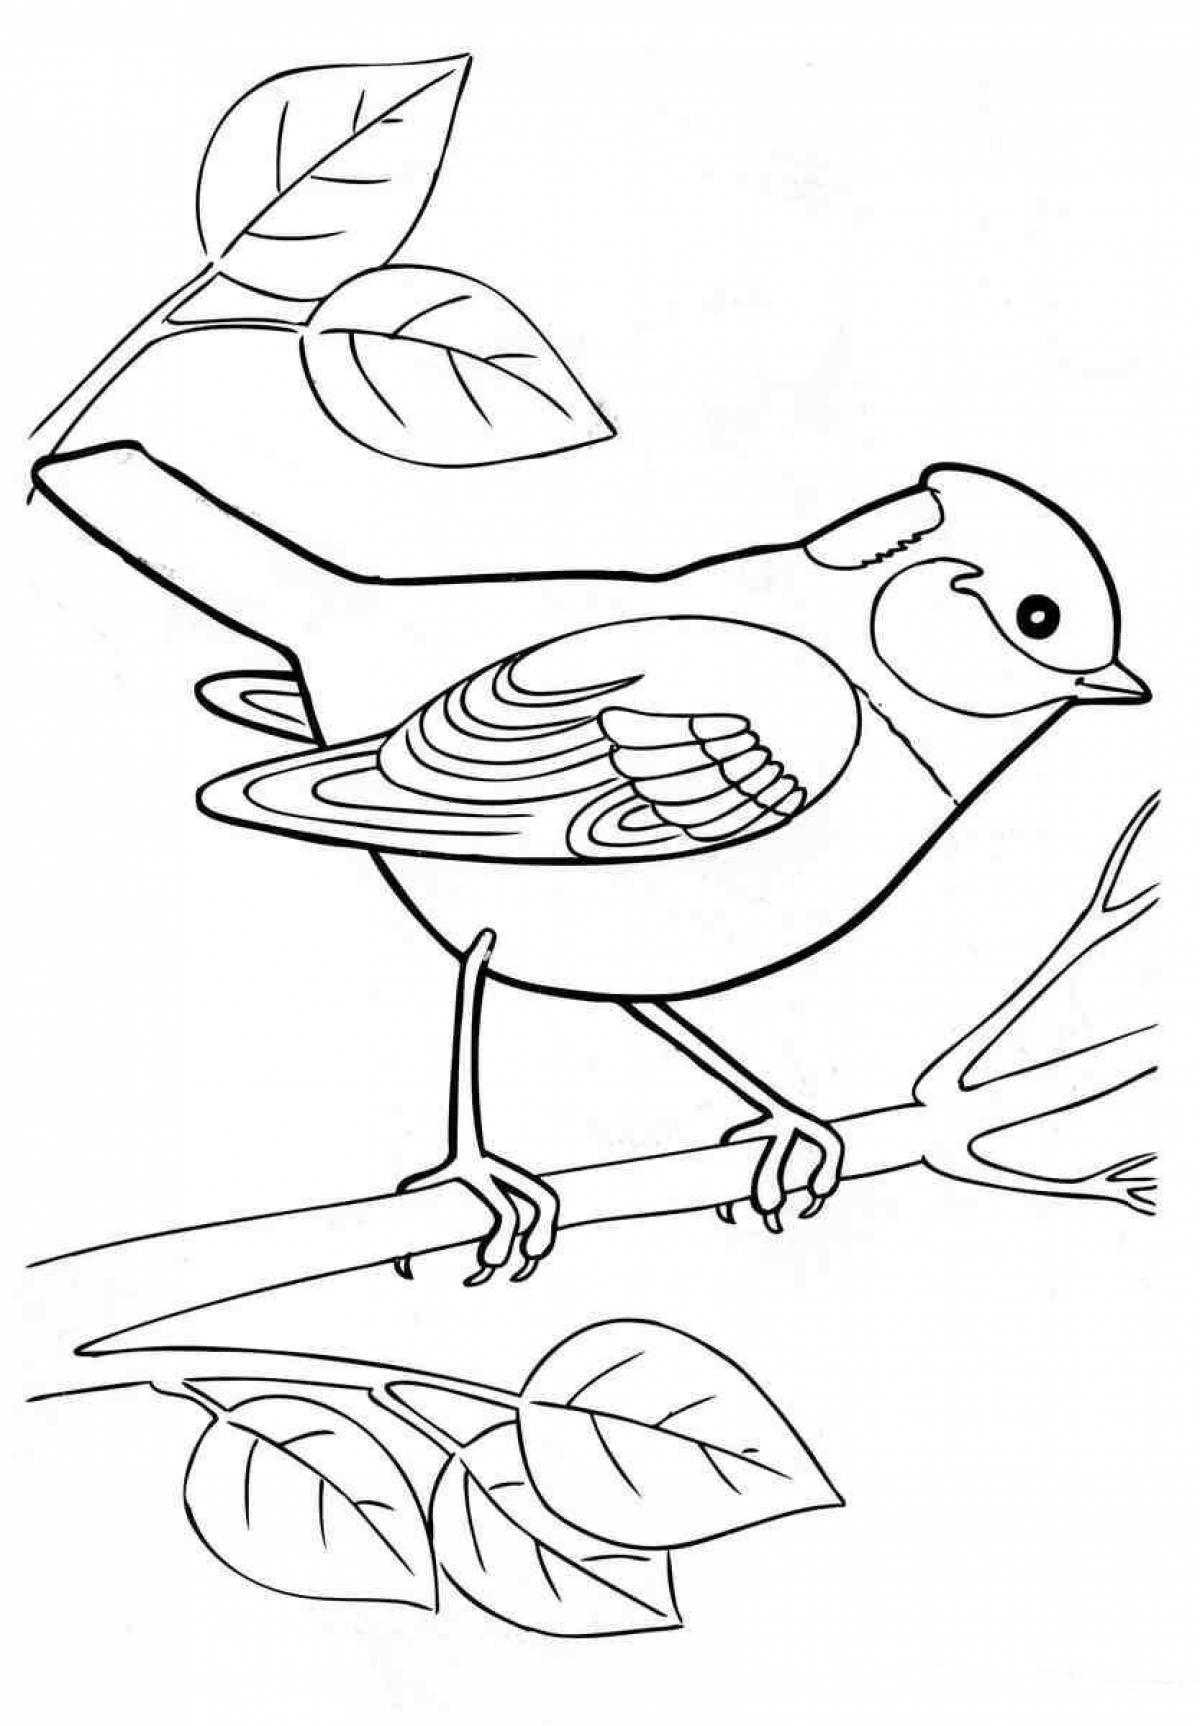 Joyful wintering birds coloring book for kids